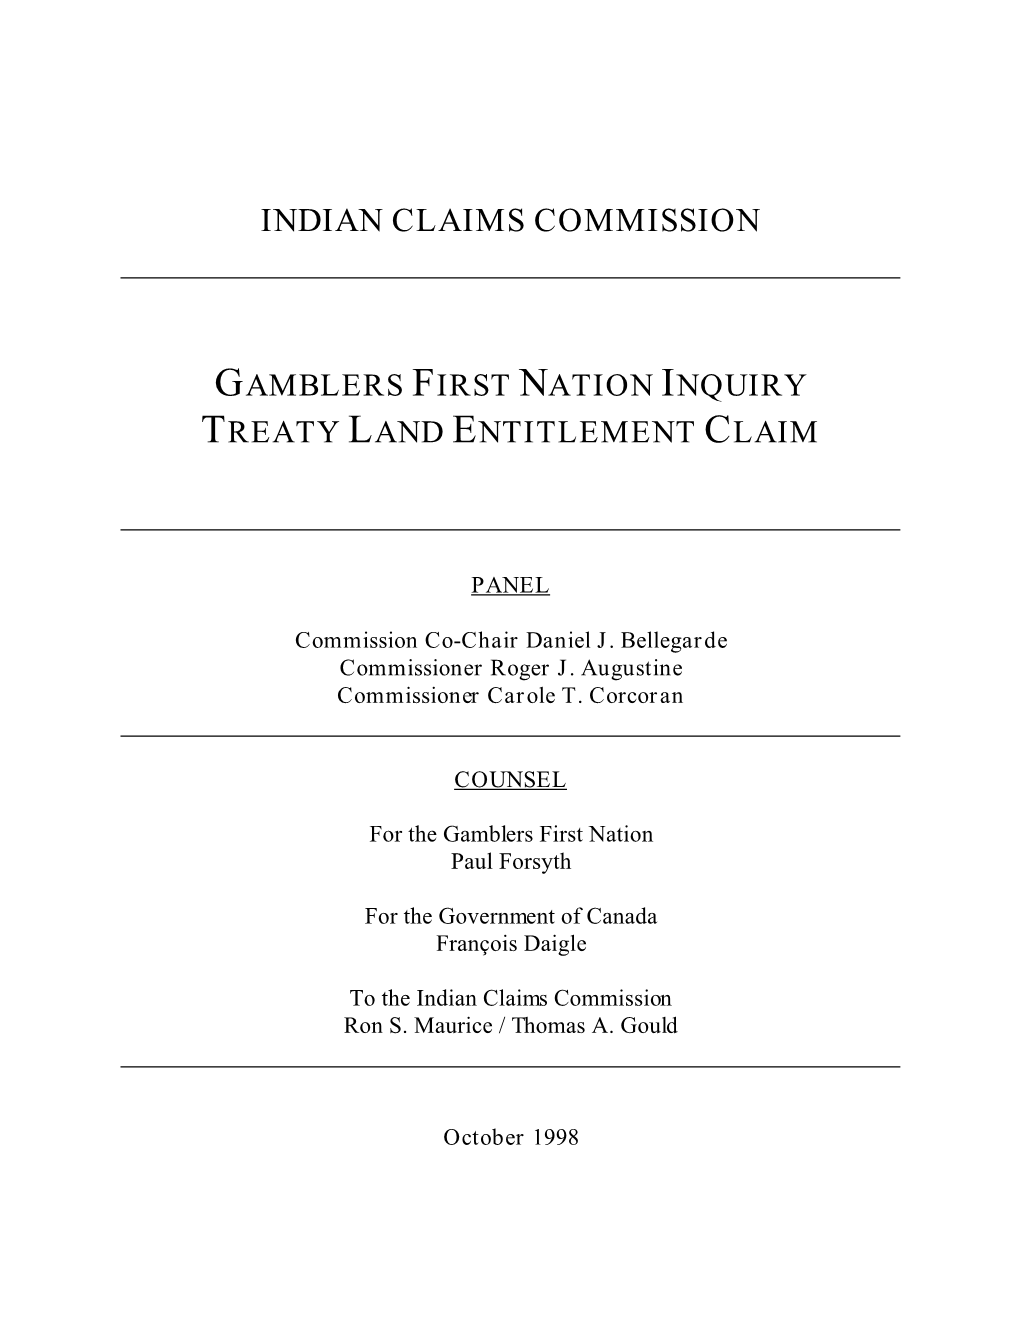 Gamblers First Nation, Treaty Land Entitlement